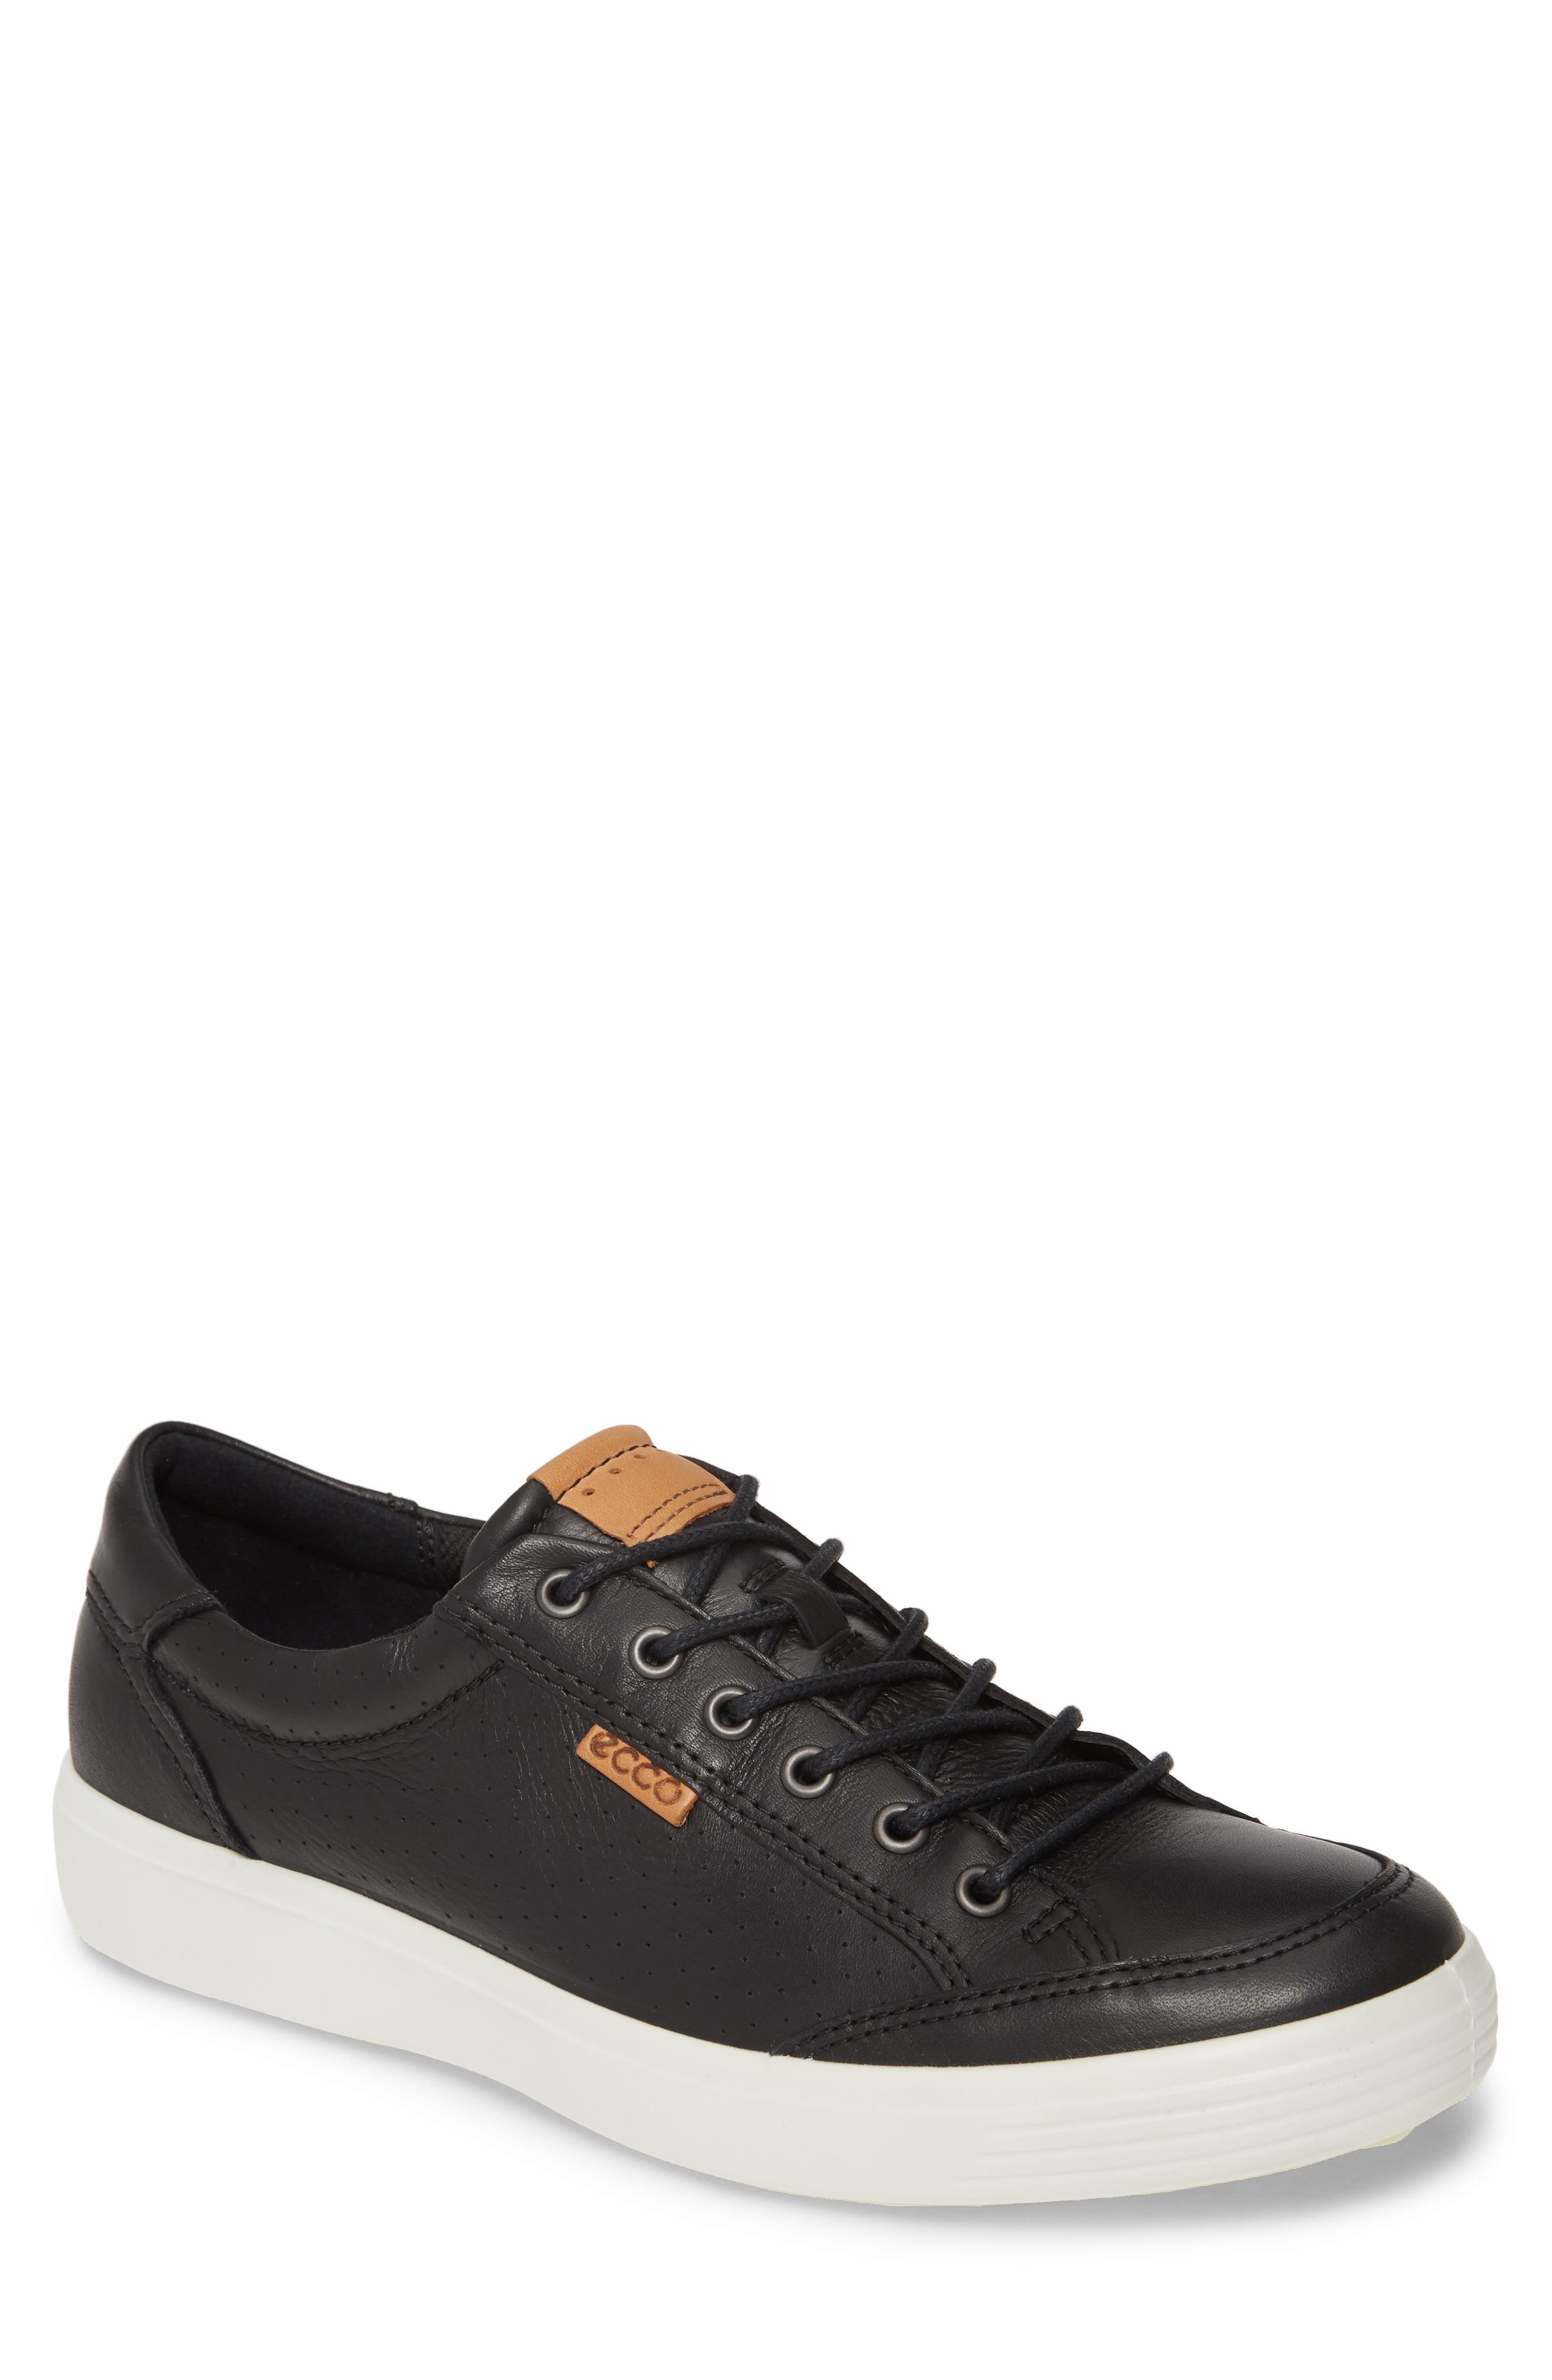 UPC 825840084597 product image for Men's Ecco Soft 7 Light Sneaker, Size 8-8.5US - Black | upcitemdb.com